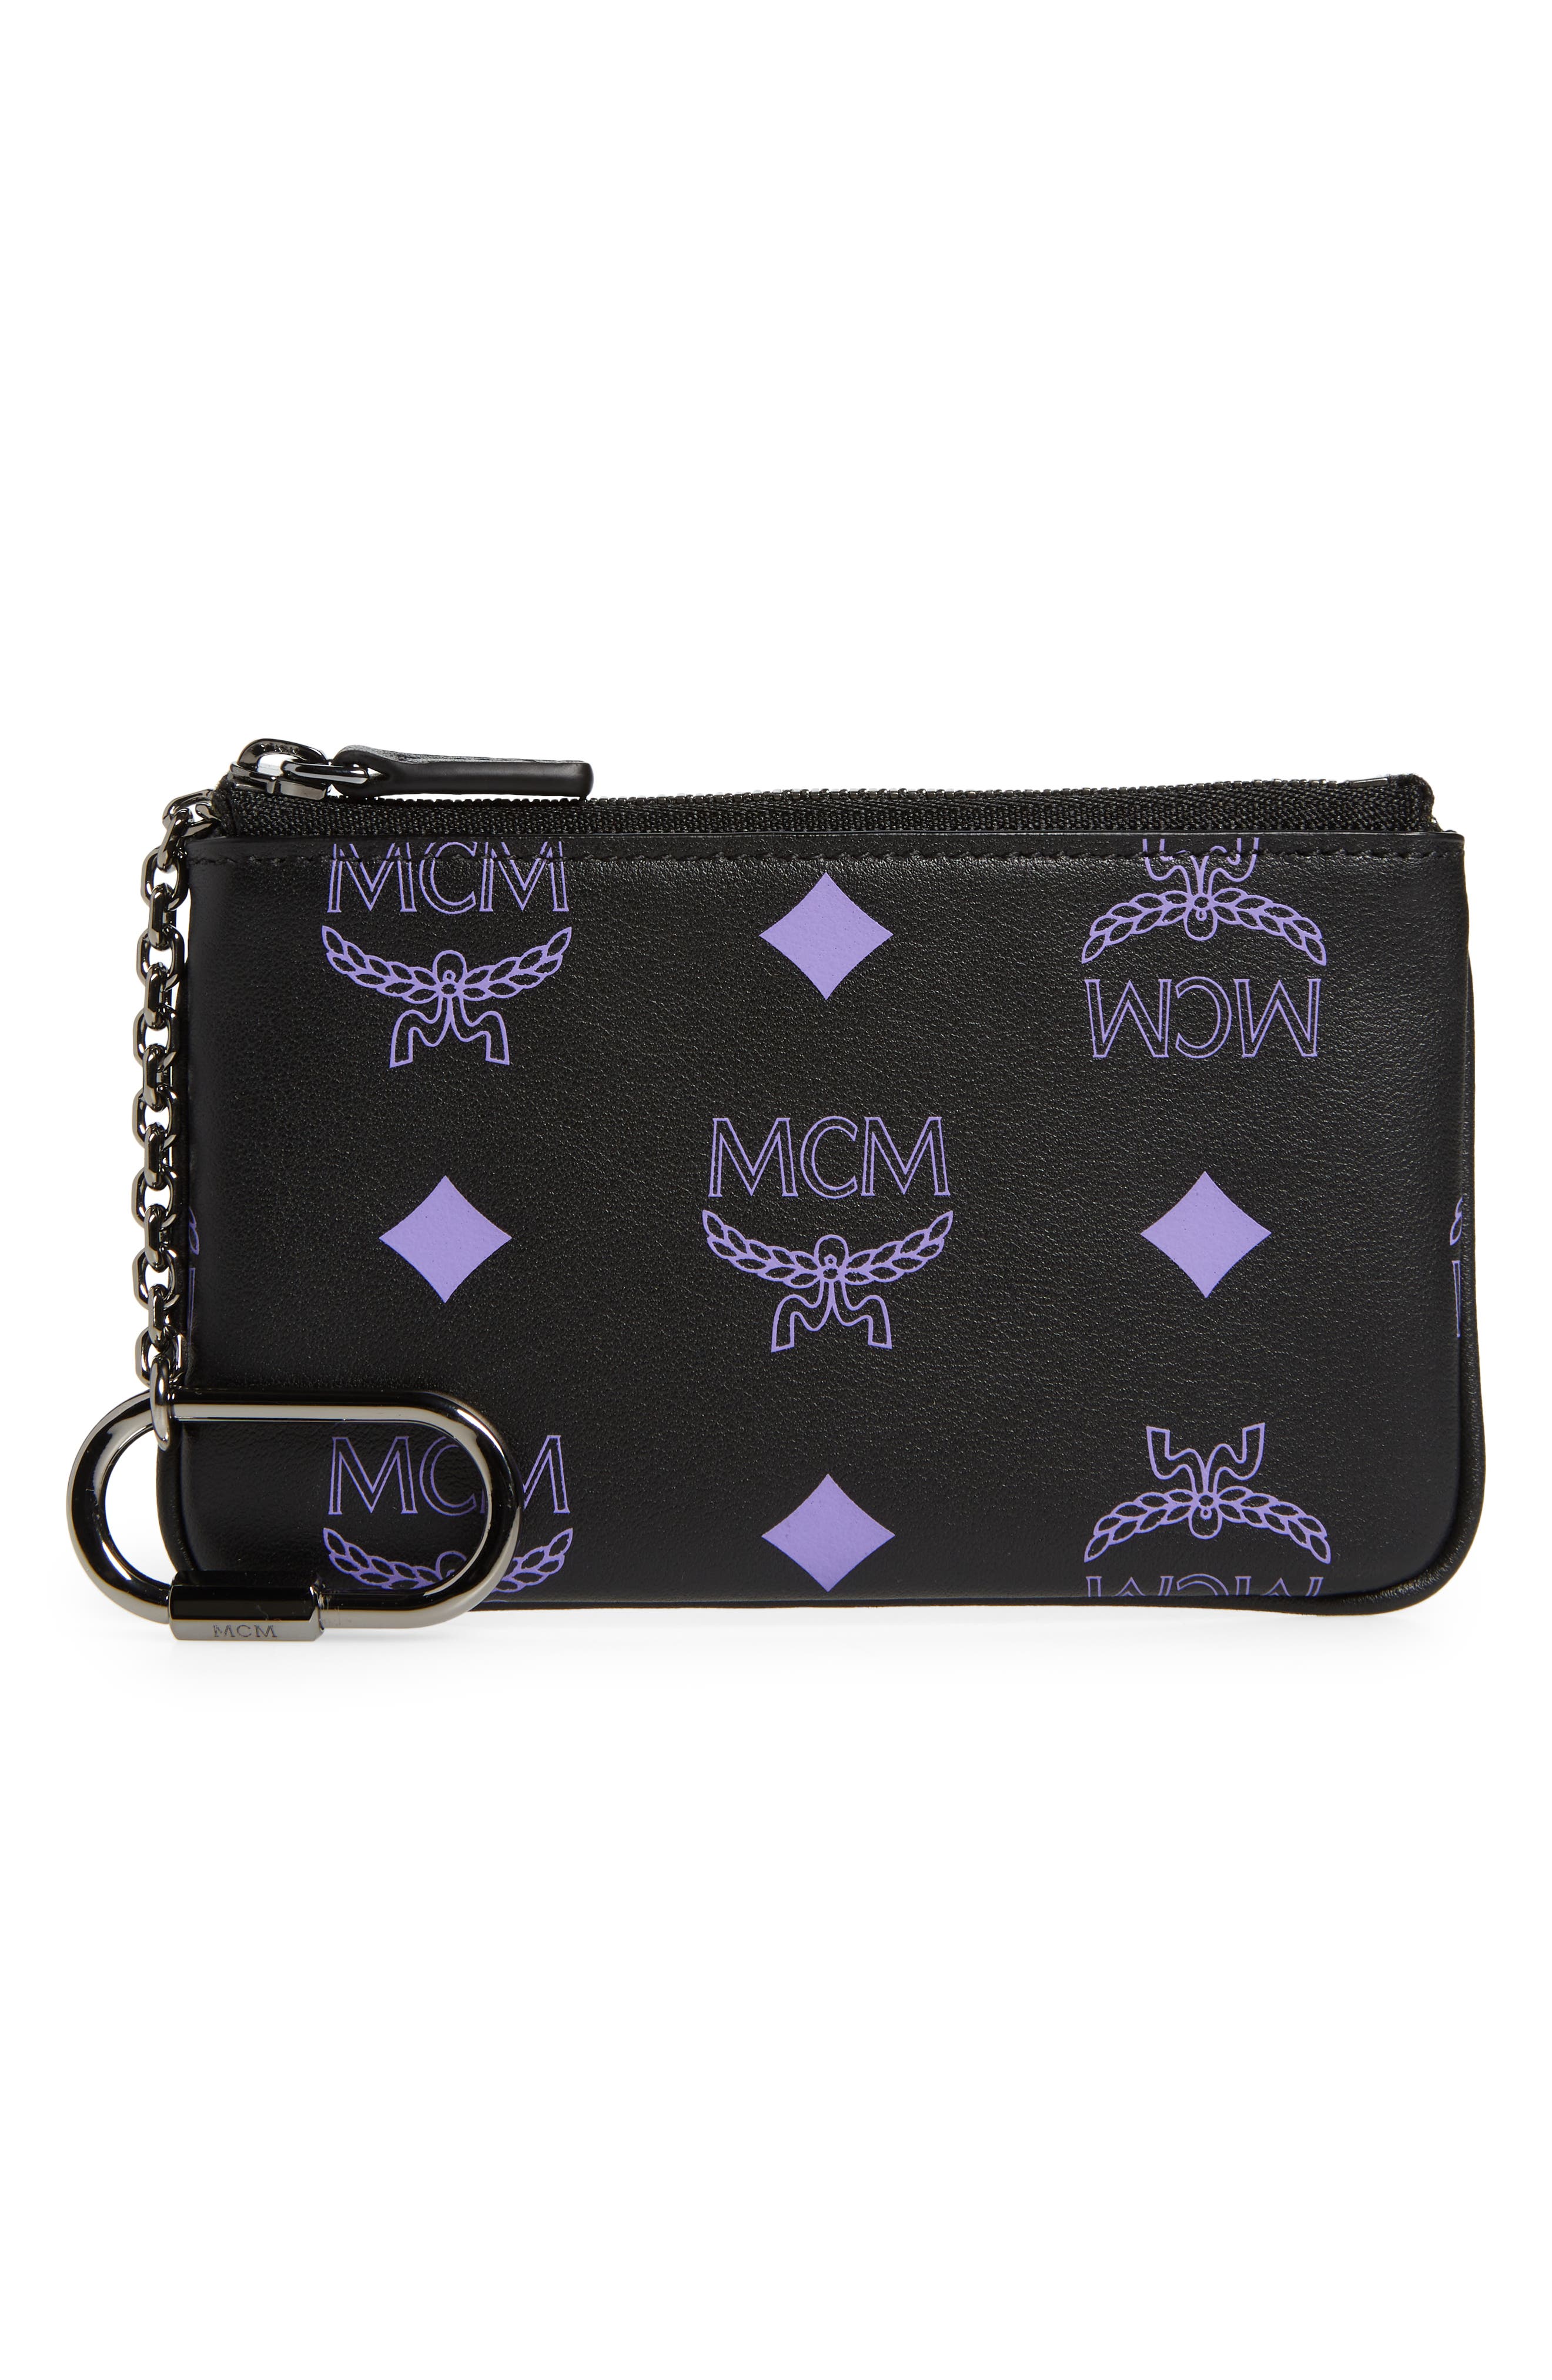 MCM Color Splash Logo Leather Key Wallet in Dahlia Purple at Nordstrom